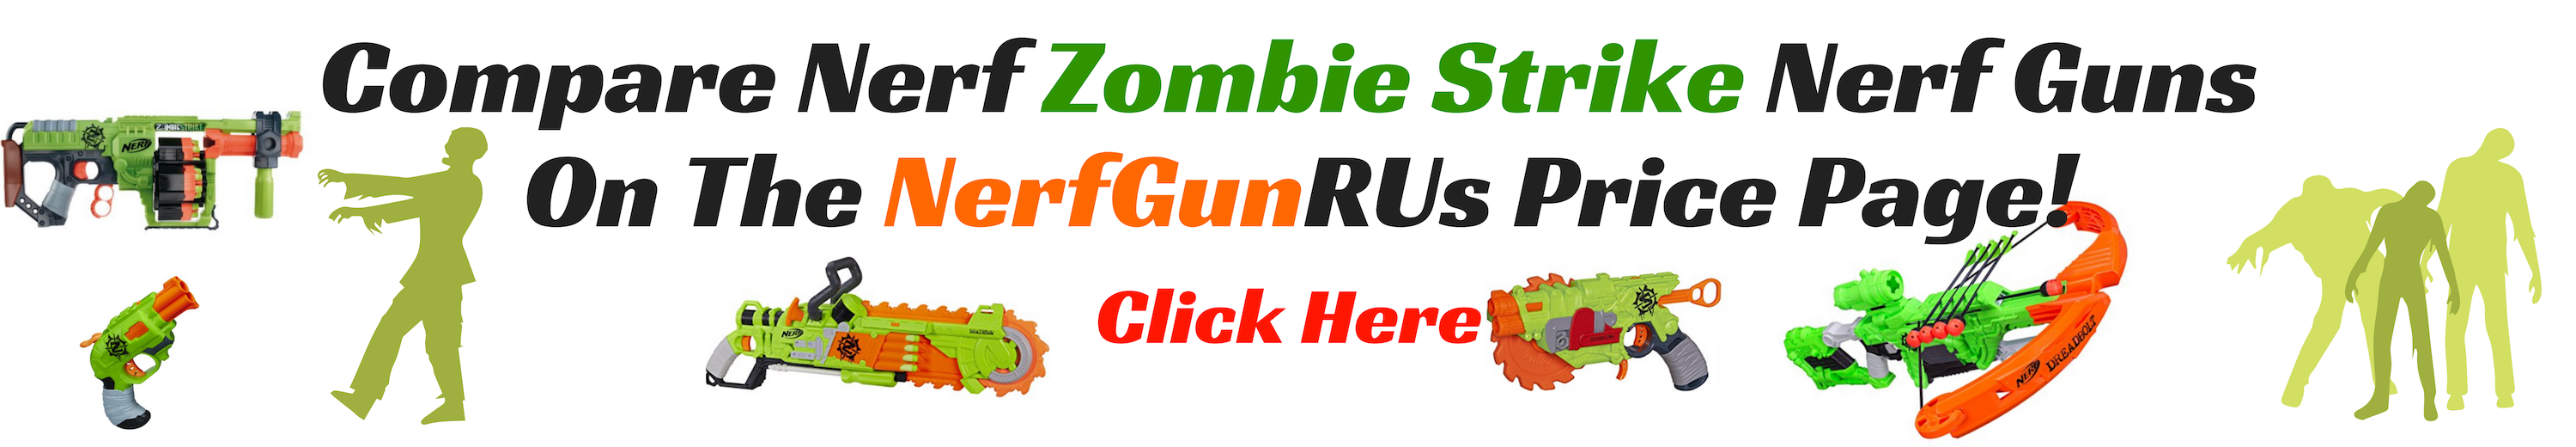 Compare Nerf Zombie Strike Nerf Guns On The NerfGunRUs Price Page